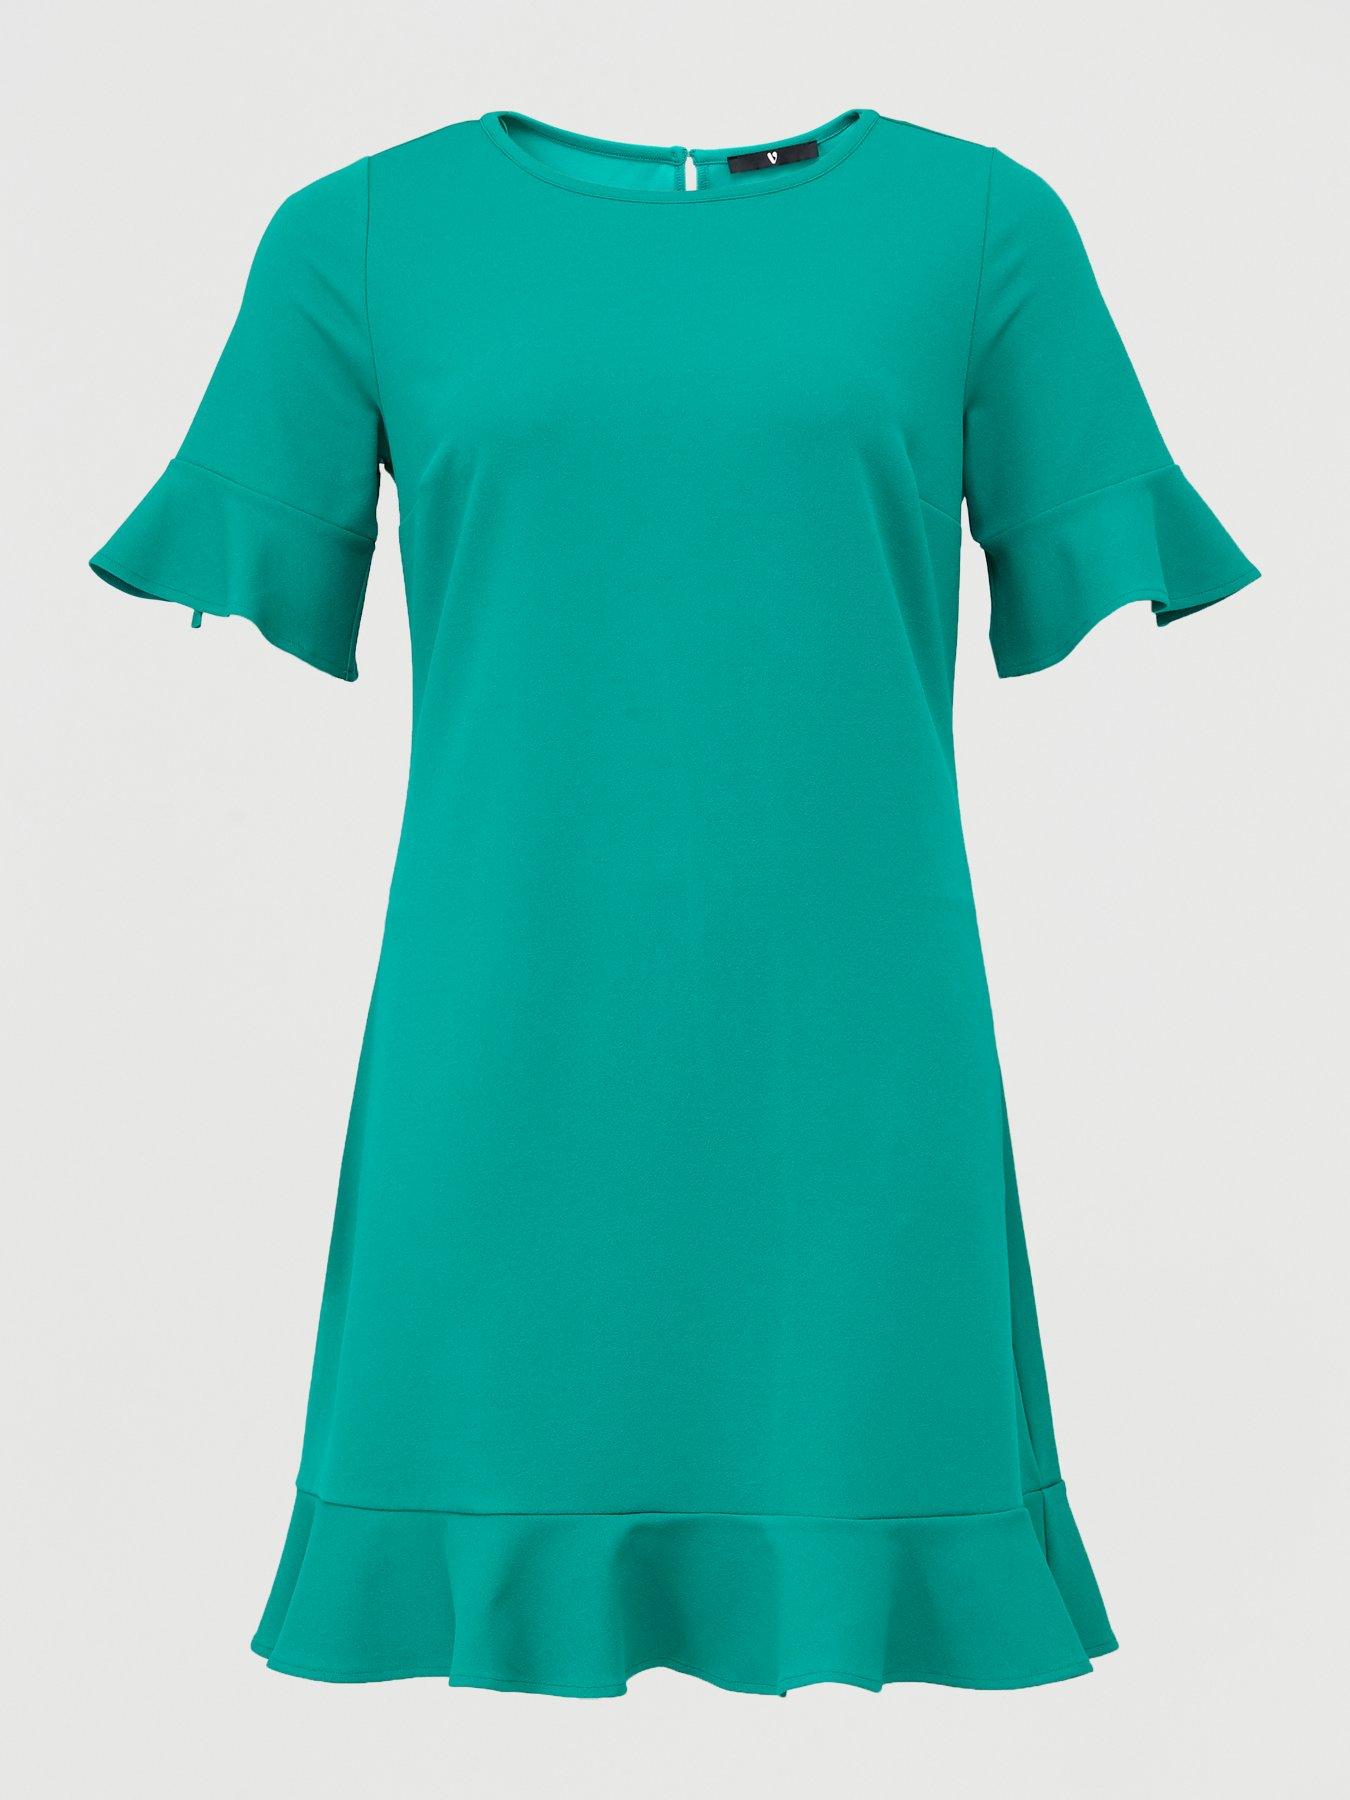 plus size green dresses uk